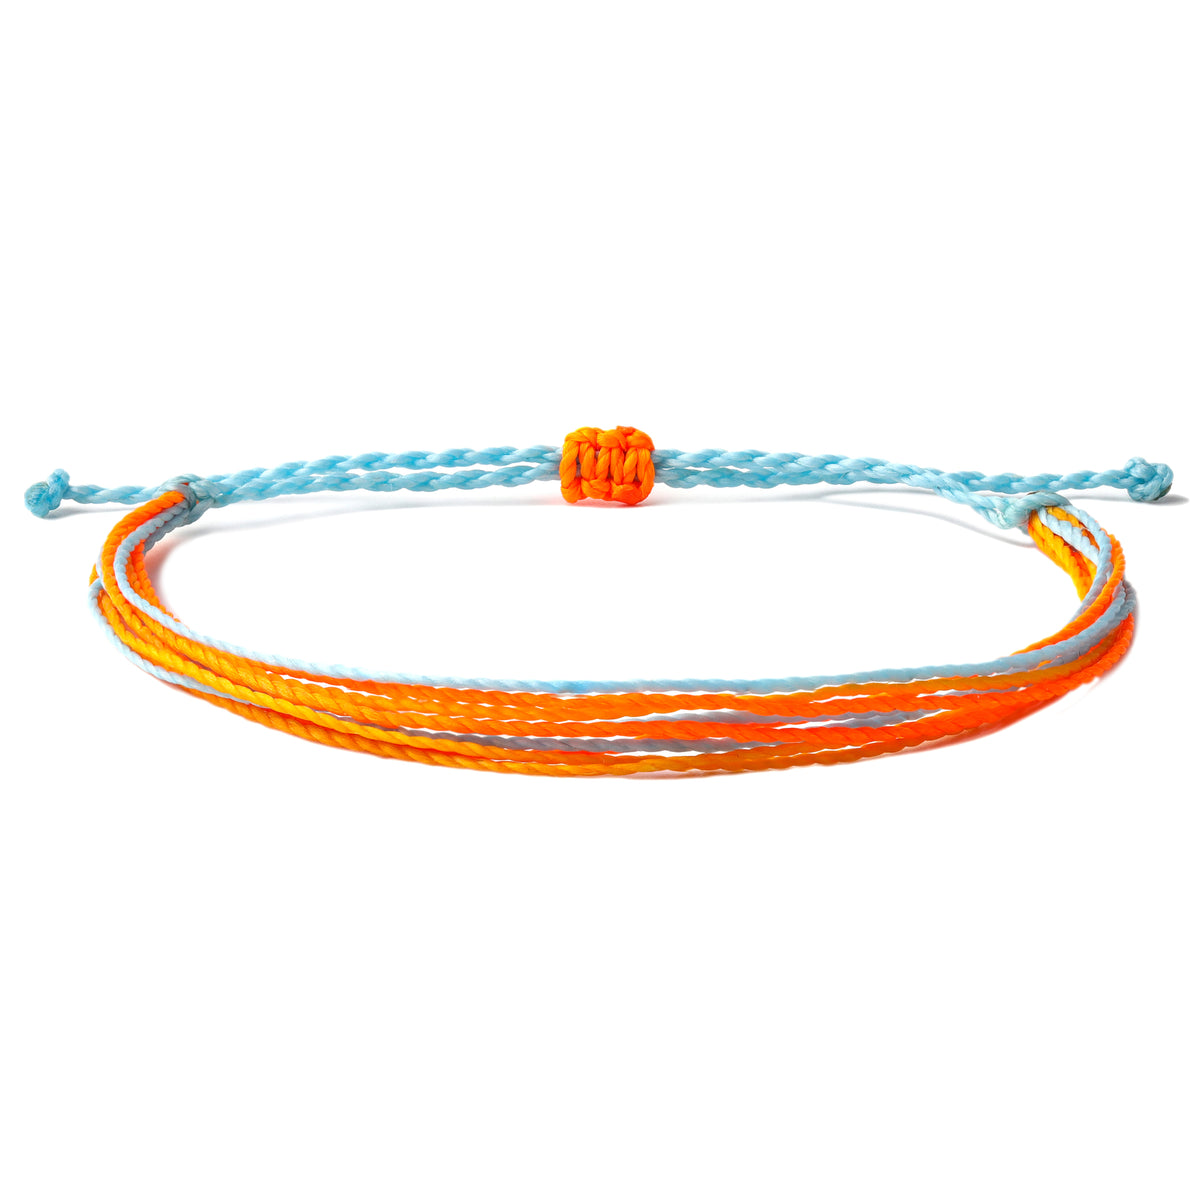 Threaded String Waterproof Wax Bracelet with neon colors, blue, orange